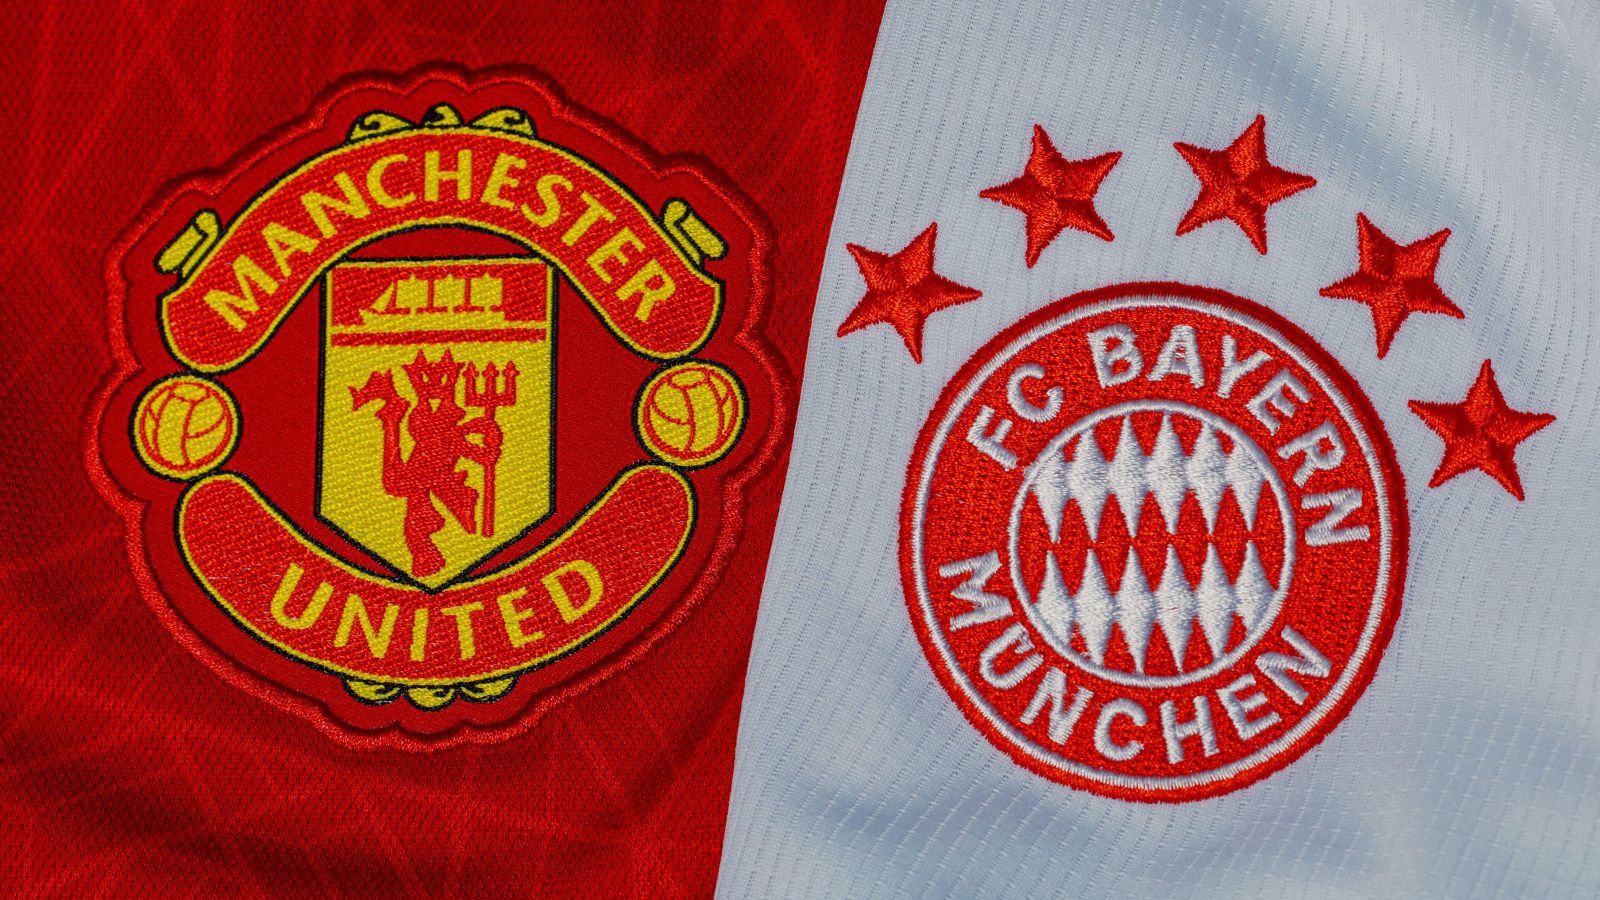 Bayern Munich vs Manchester United - Champions League Match - Dilta Sport